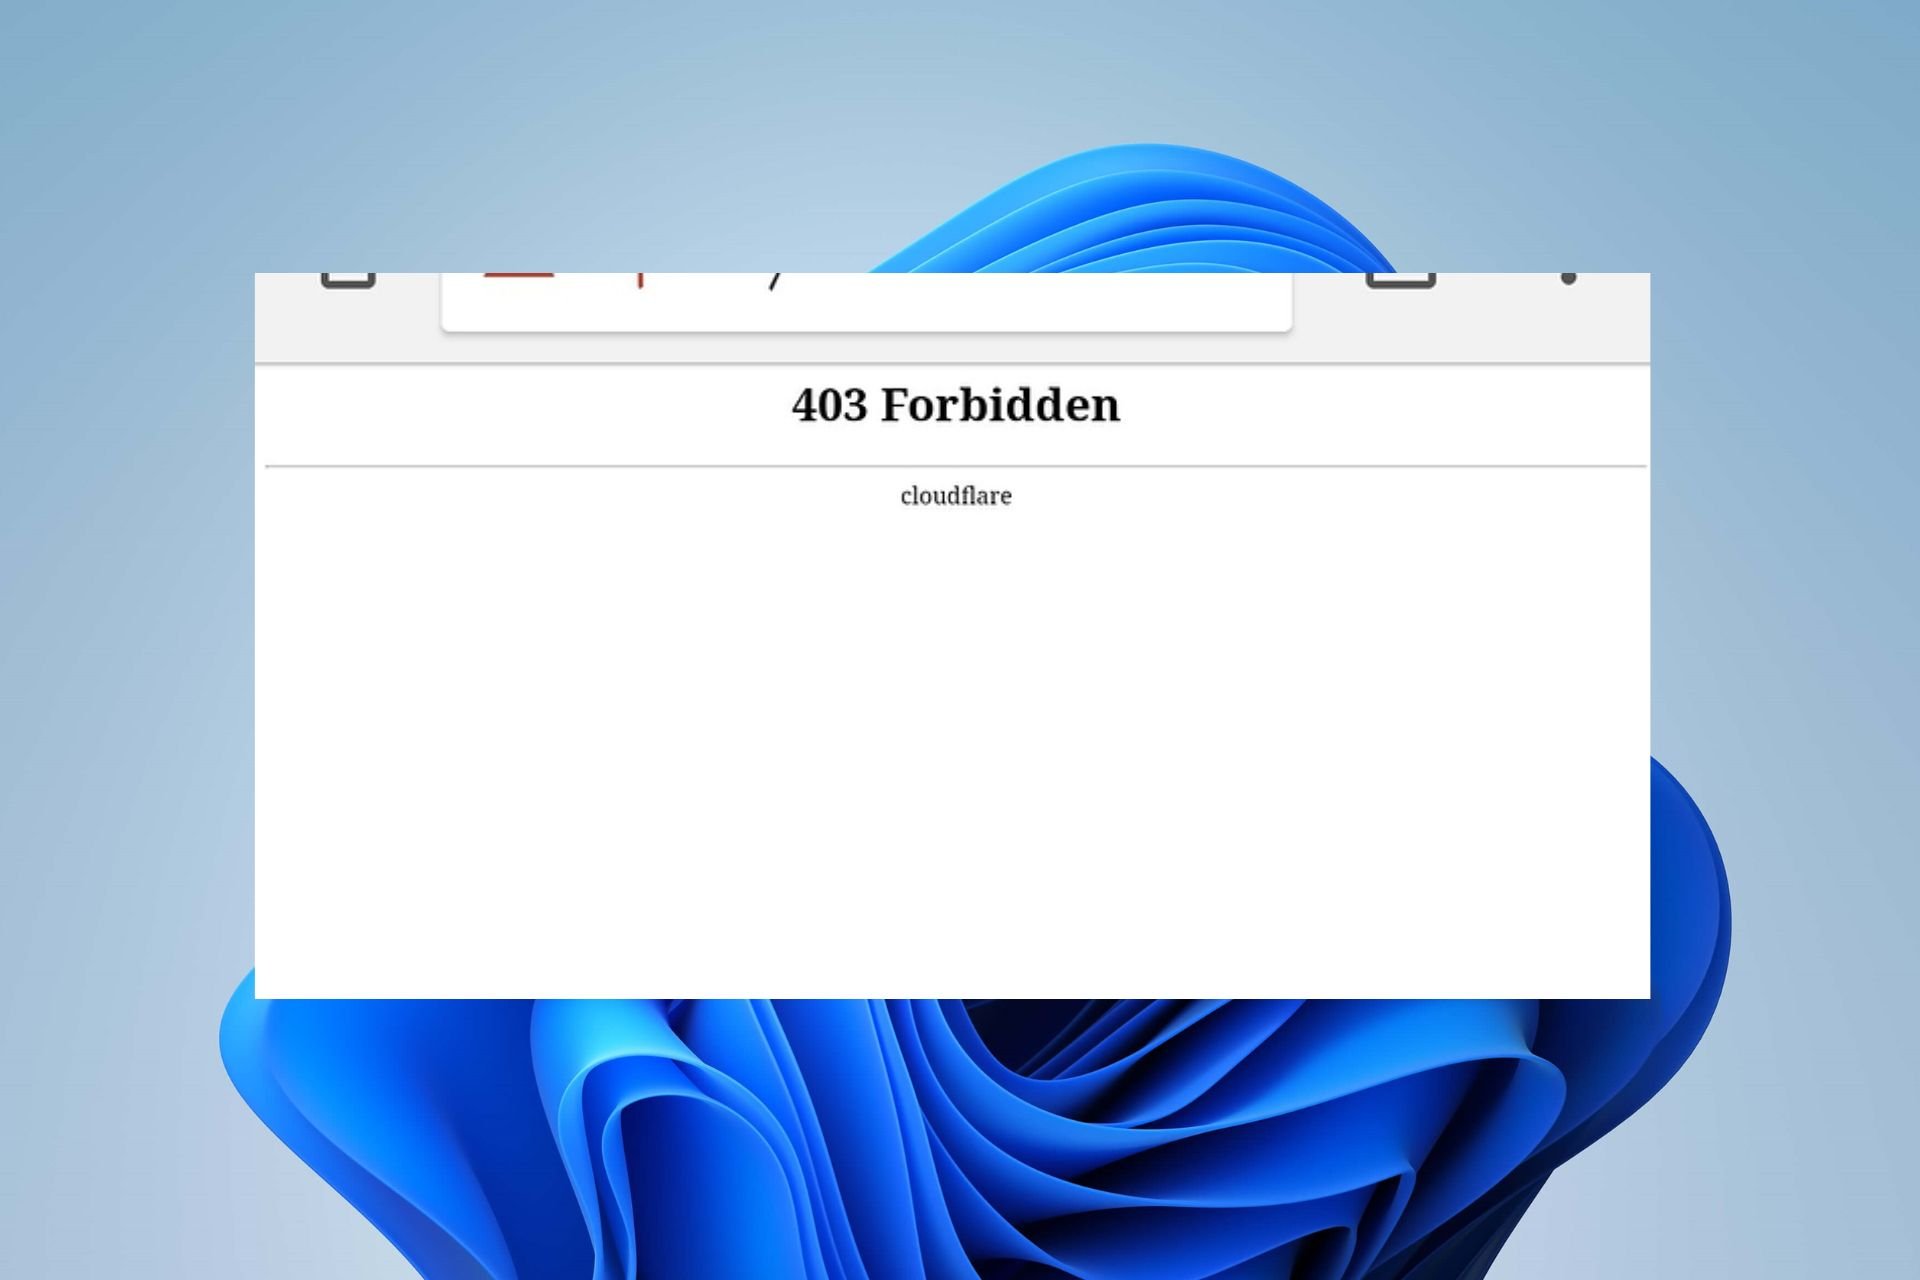 Cloudflare 403 Forbidden